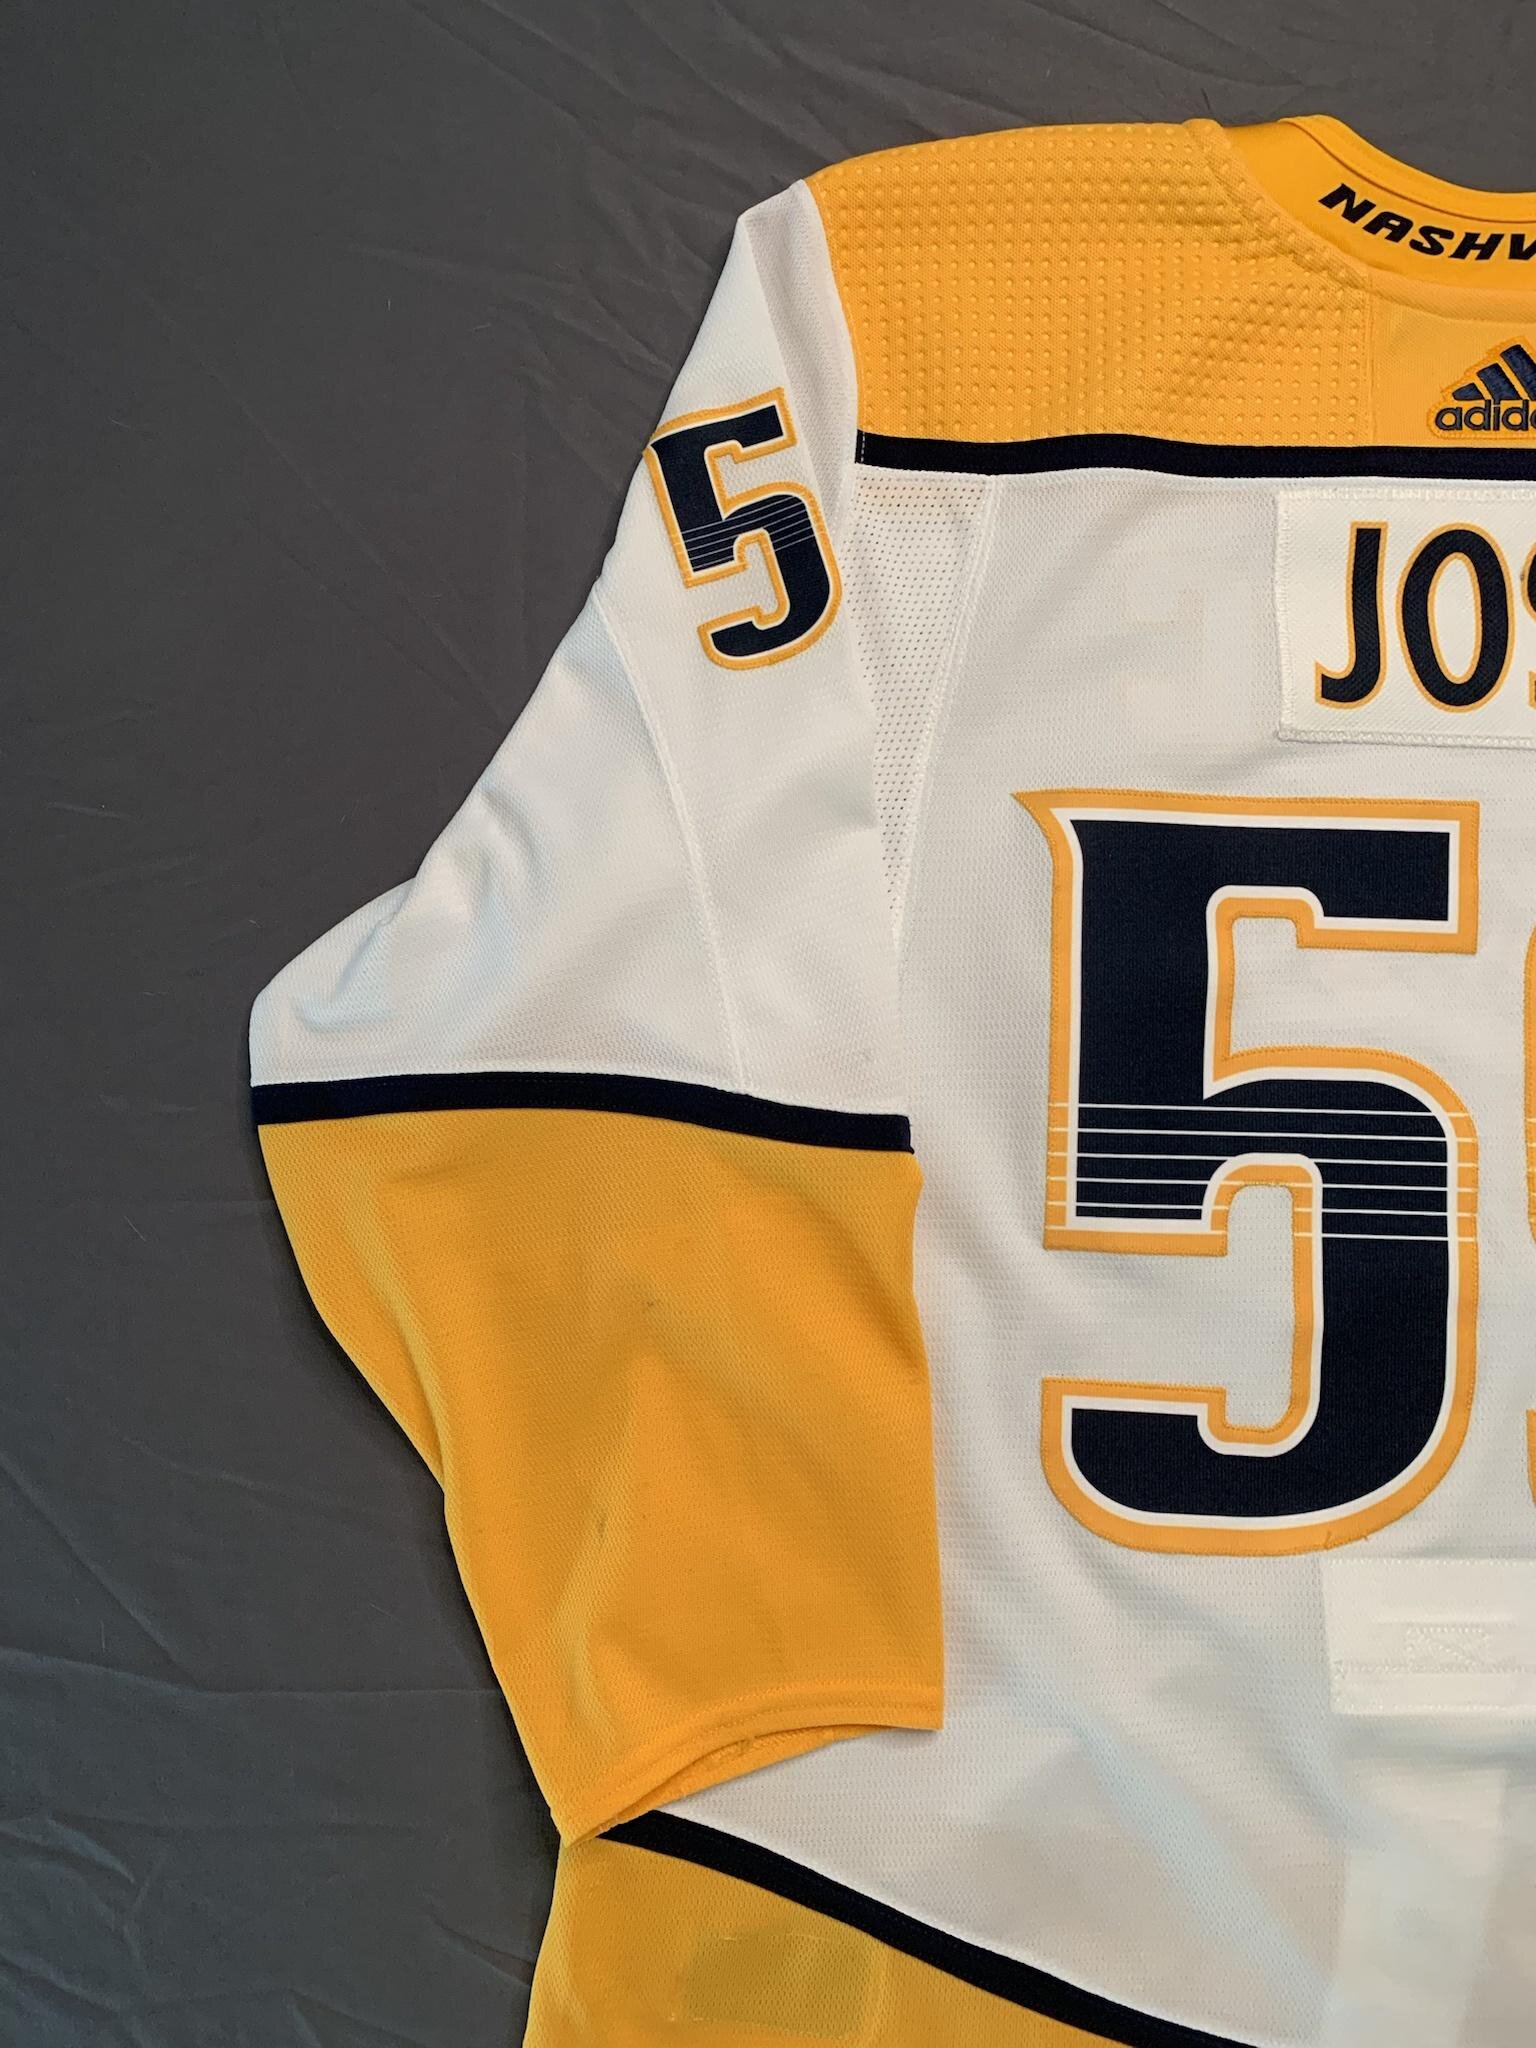 Roman Josi 2019-2020 Nashville Predators White Set 1 Game Worn Jersey —  Desert Hockey Threads